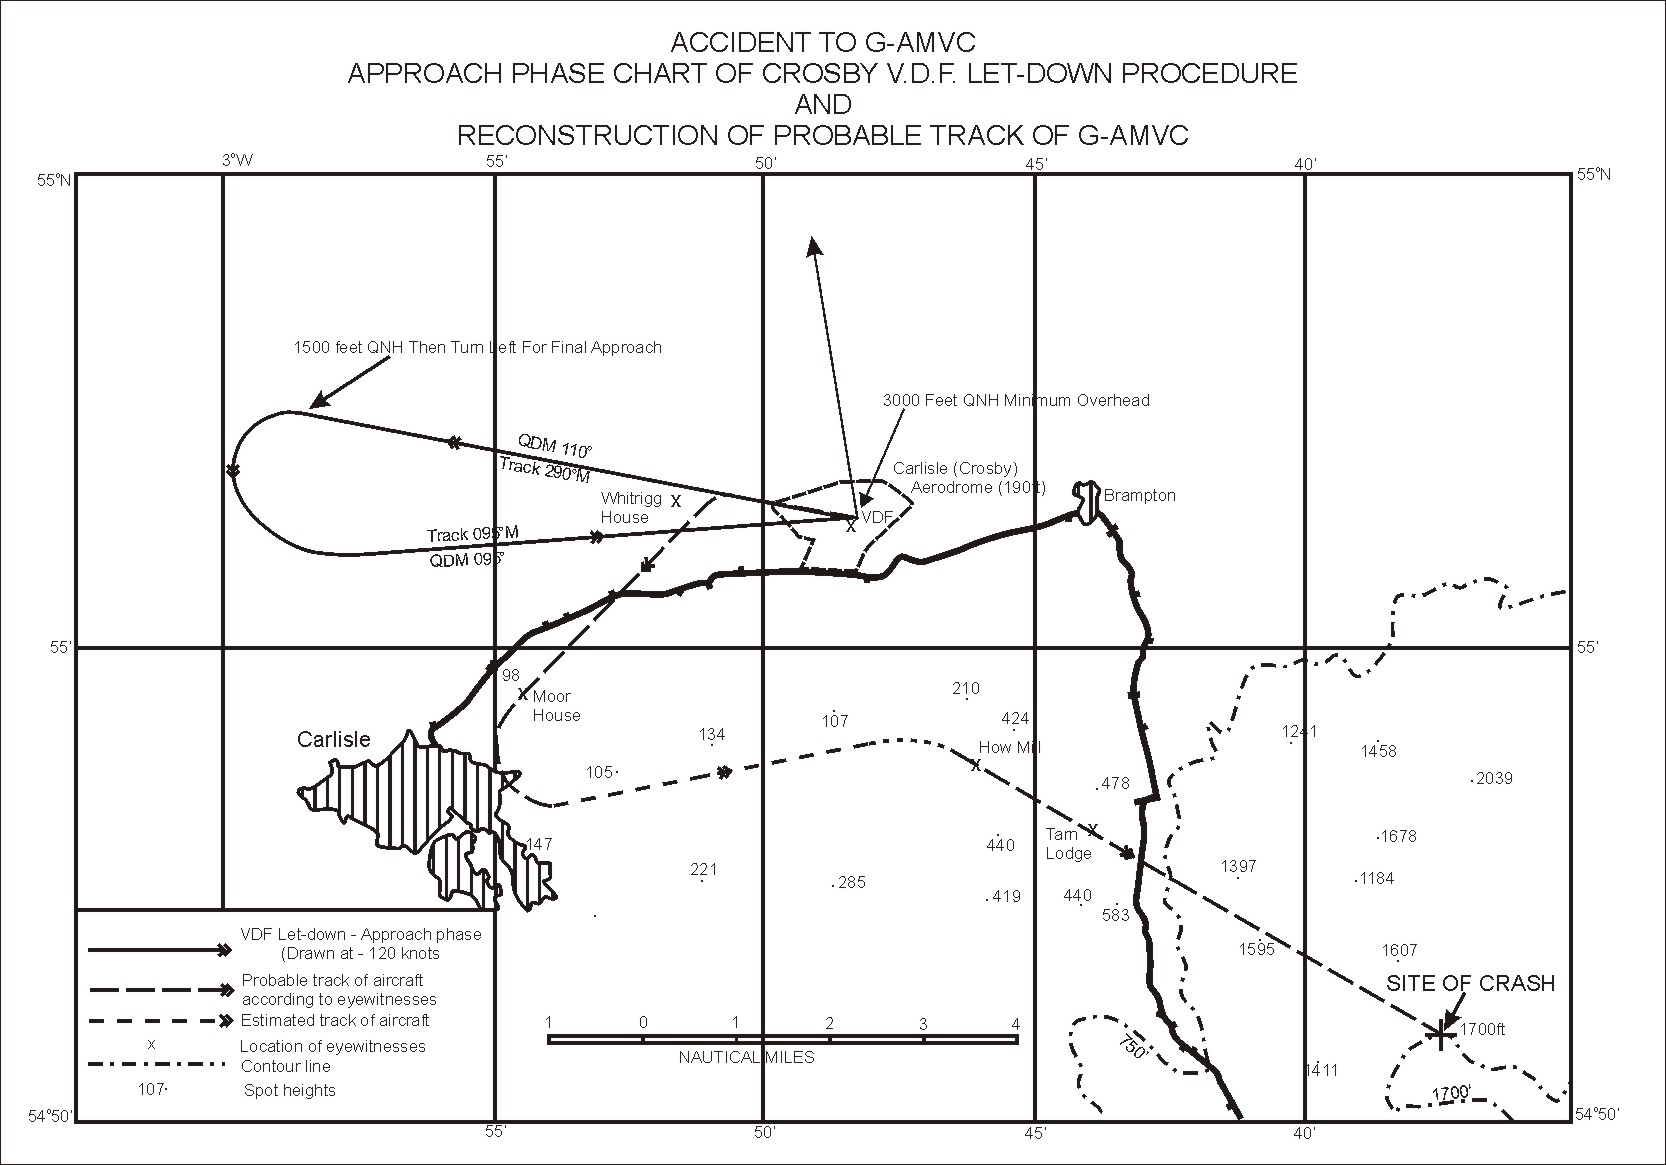 Map showing the route taken by Dakota G-AMVC around Carlisle before it crashed